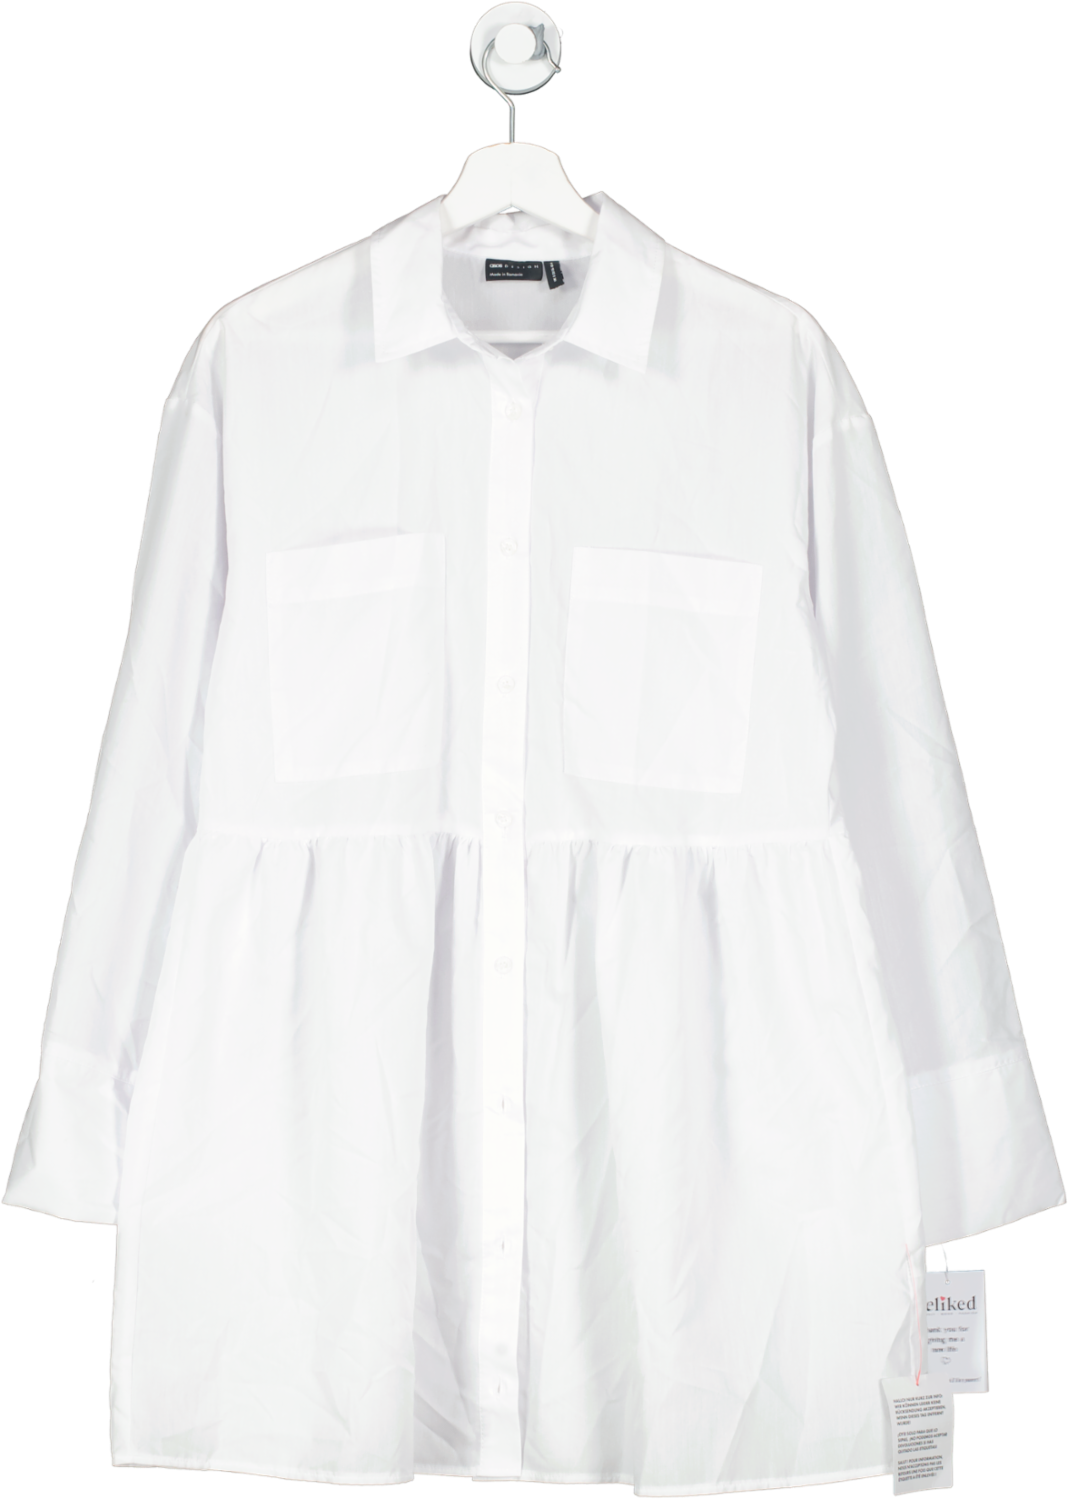 ASOS White Long Sleeve Shirt Dress UK 8